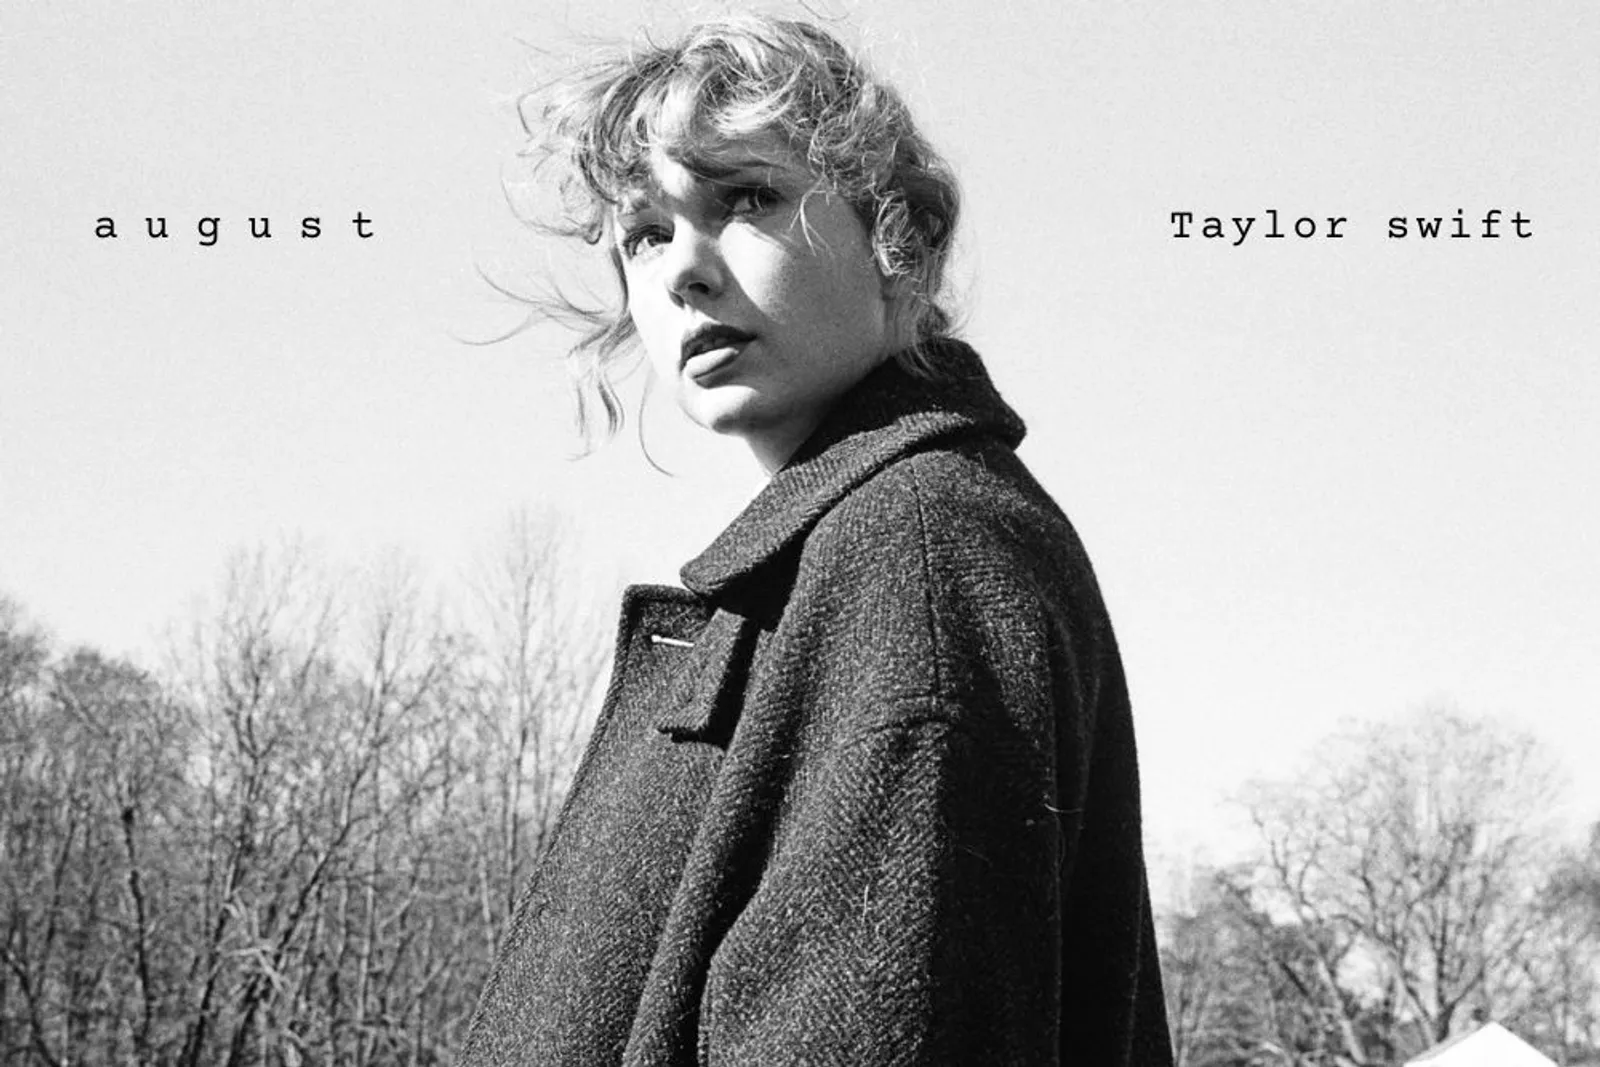 Kisah Cinta Segitiga, Ini Fakta & Lirik Lagu "August" - Taylor Swift